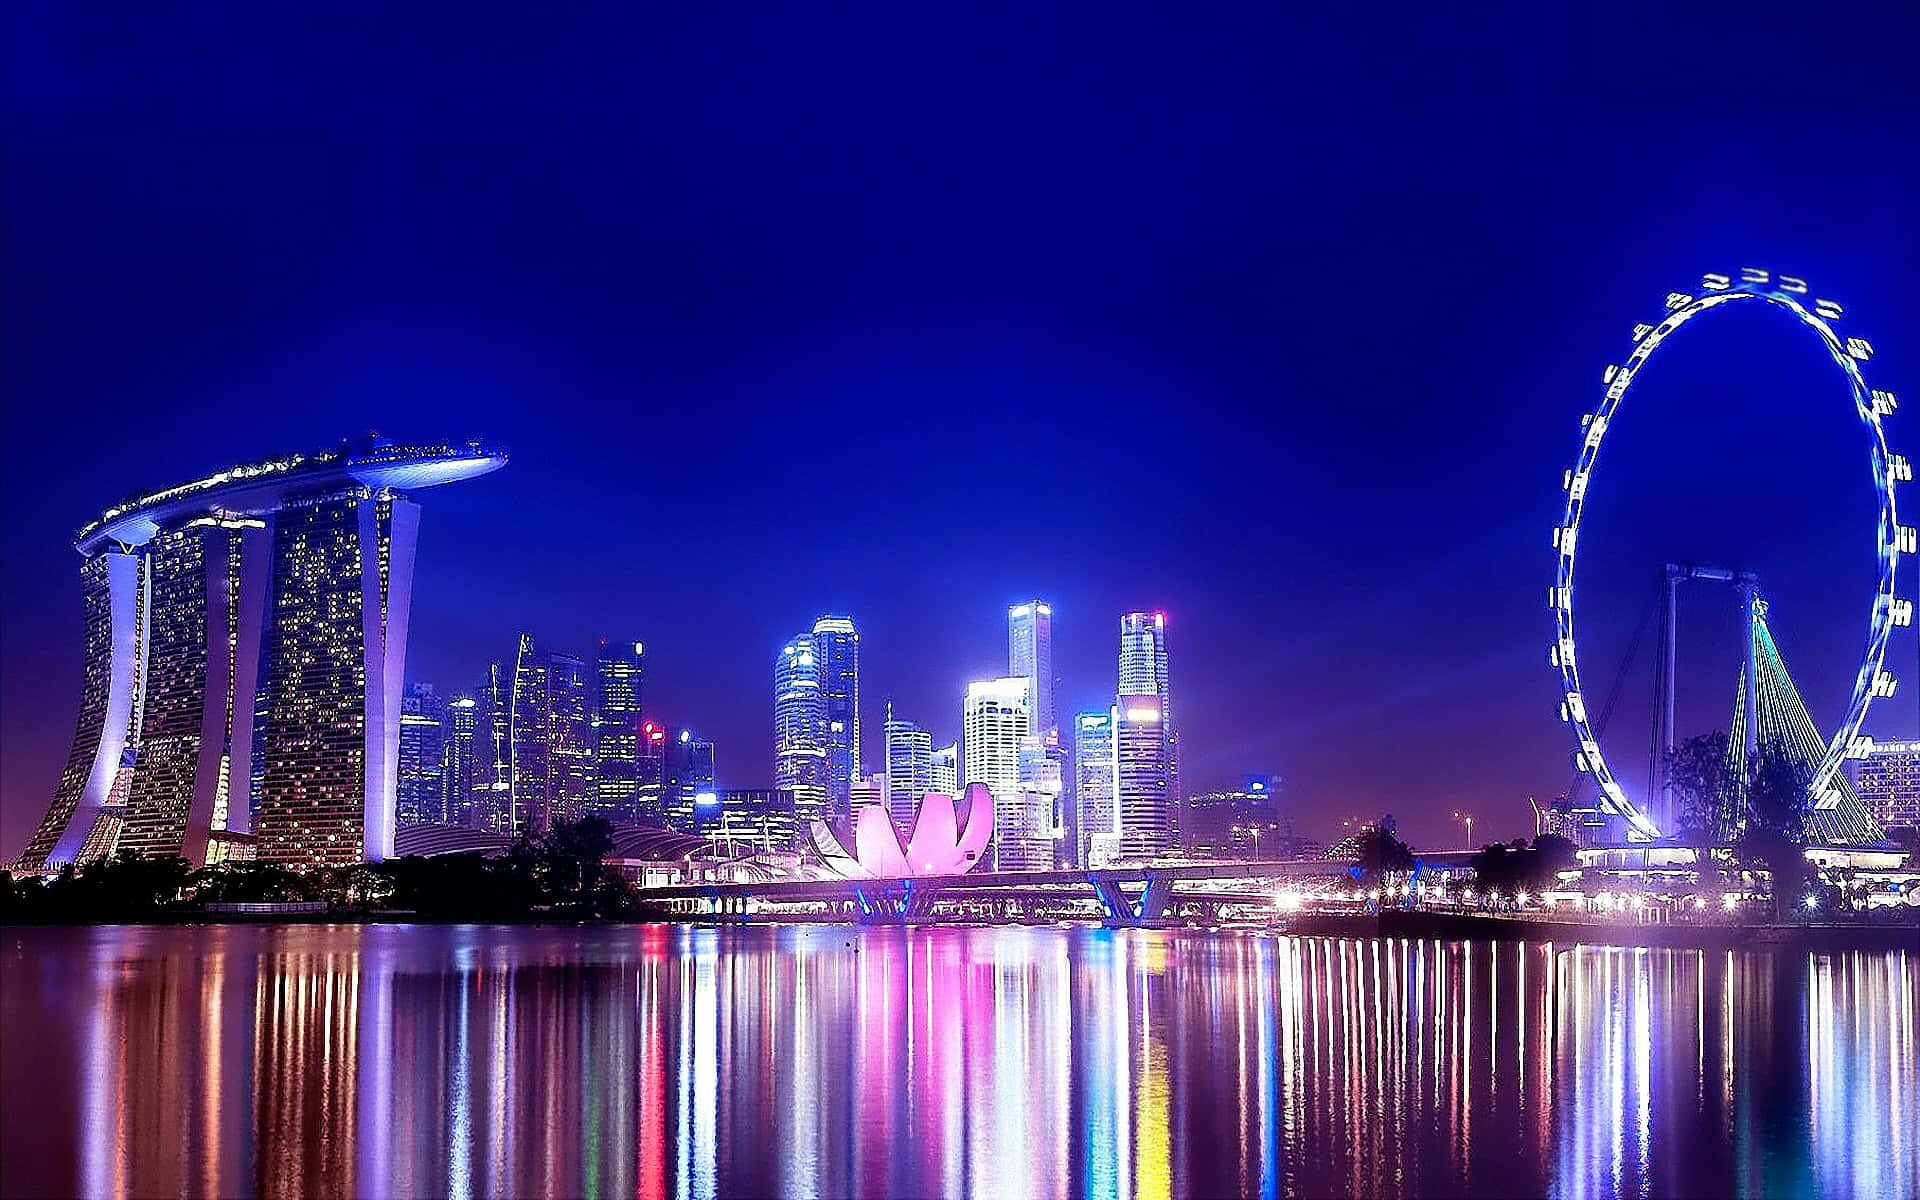 Singapore City At Night With The Marina Bay Ferris Wheel